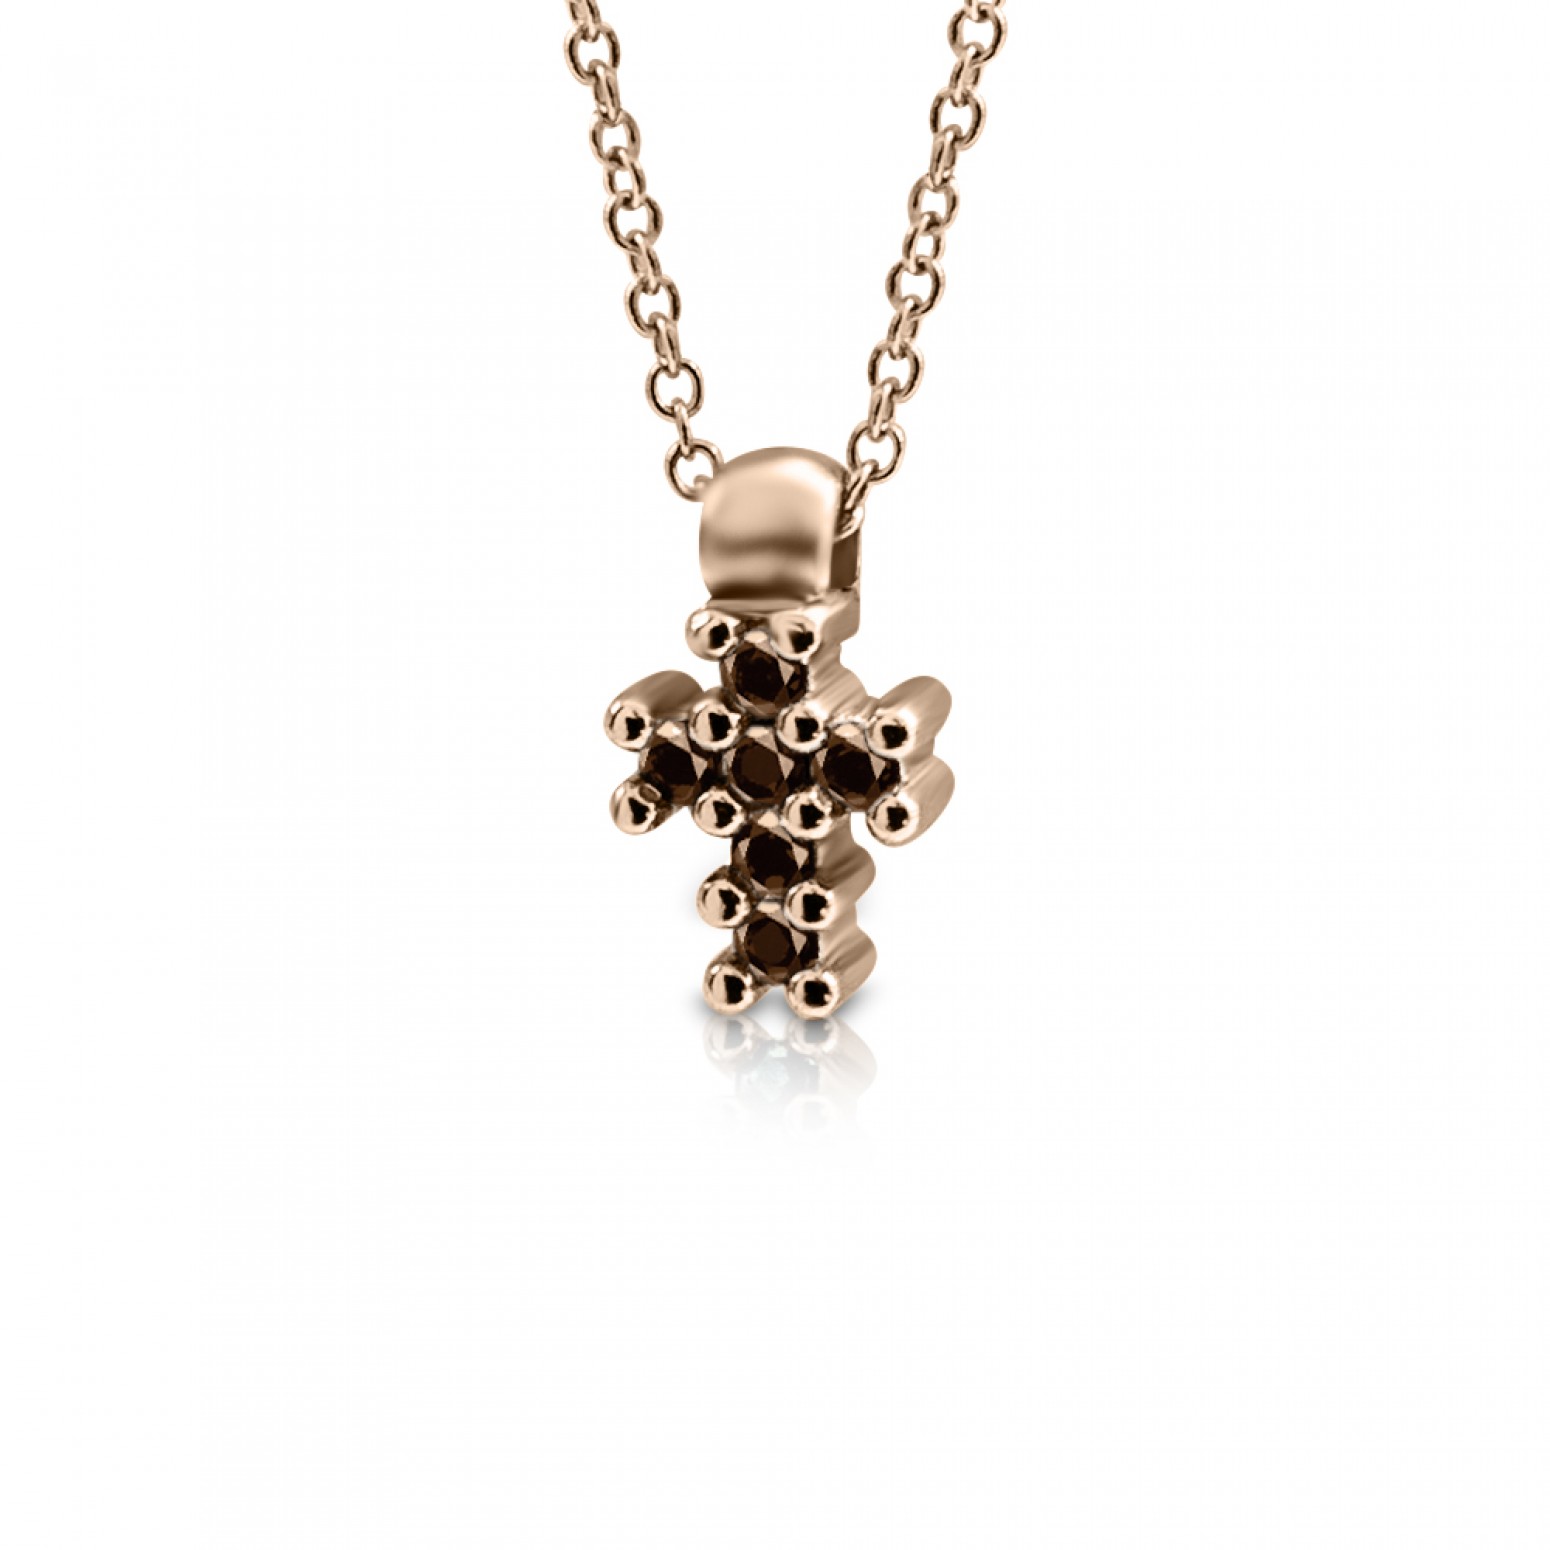 Cross necklace, Κ9 pink gold with brown zircon, me2147 NECKLACES Κοσμηματα - chrilia.gr